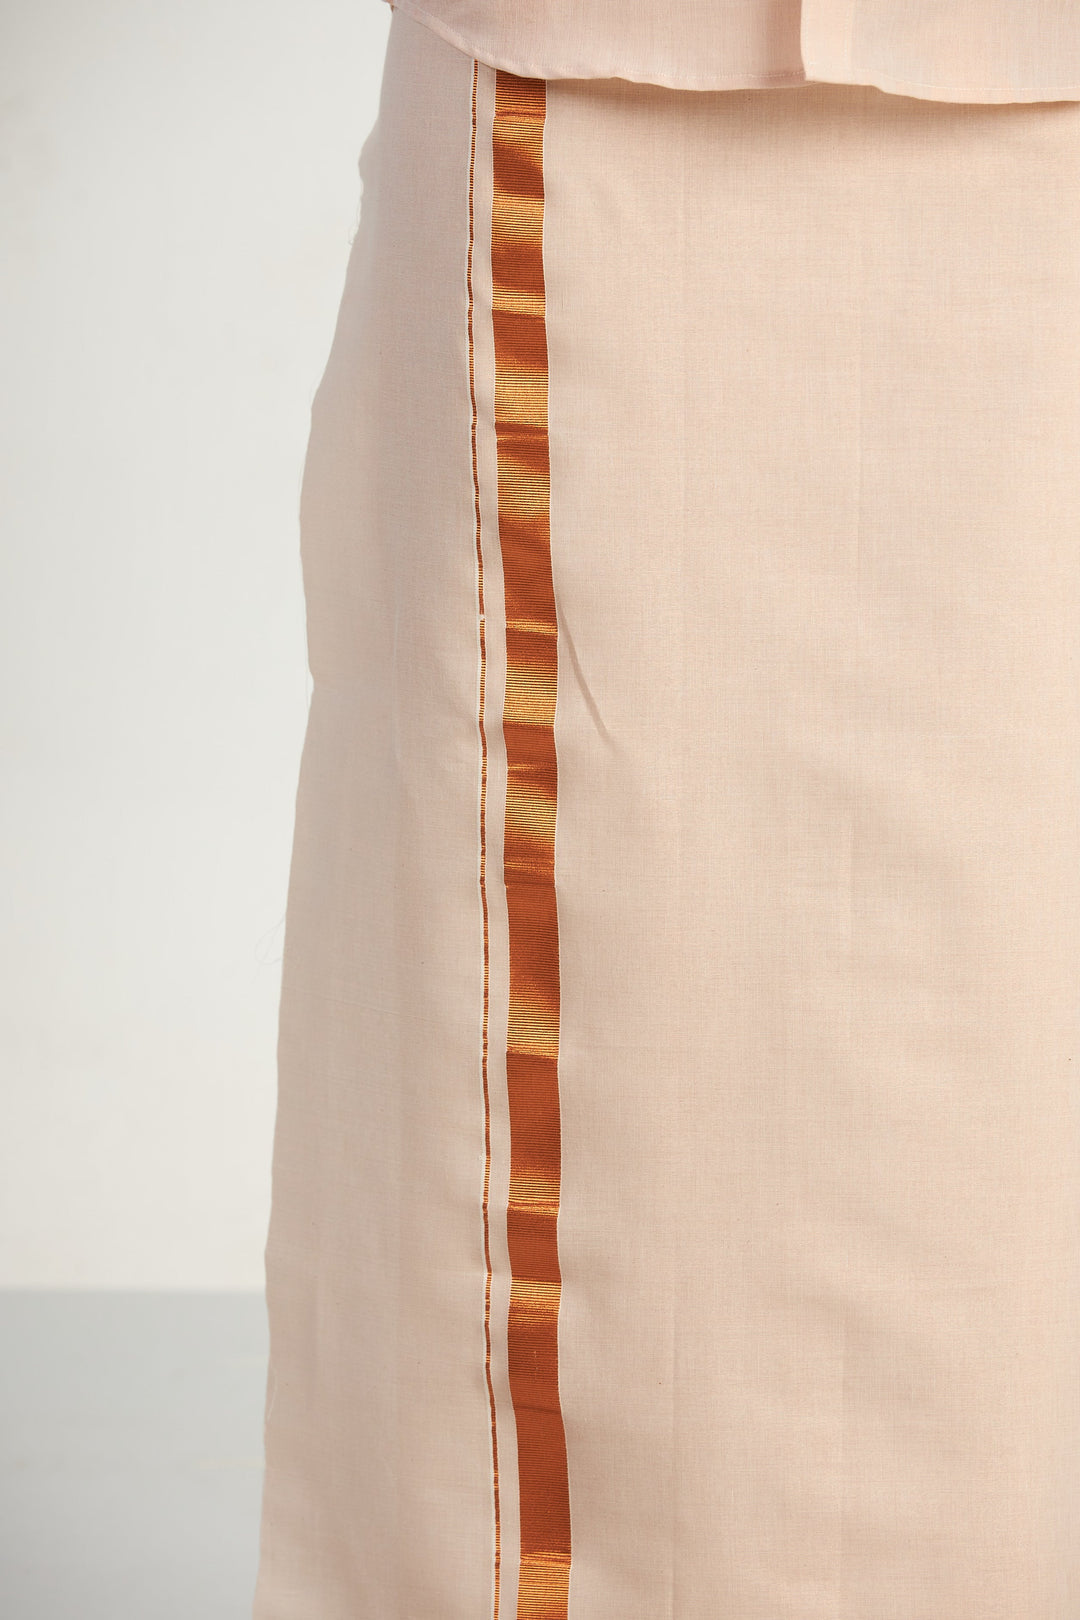 UATHAYAM Copper Orange Color Cotton Vaibhav Shirt and Tissue Jari Dhoti Set (2 In 1) For Men